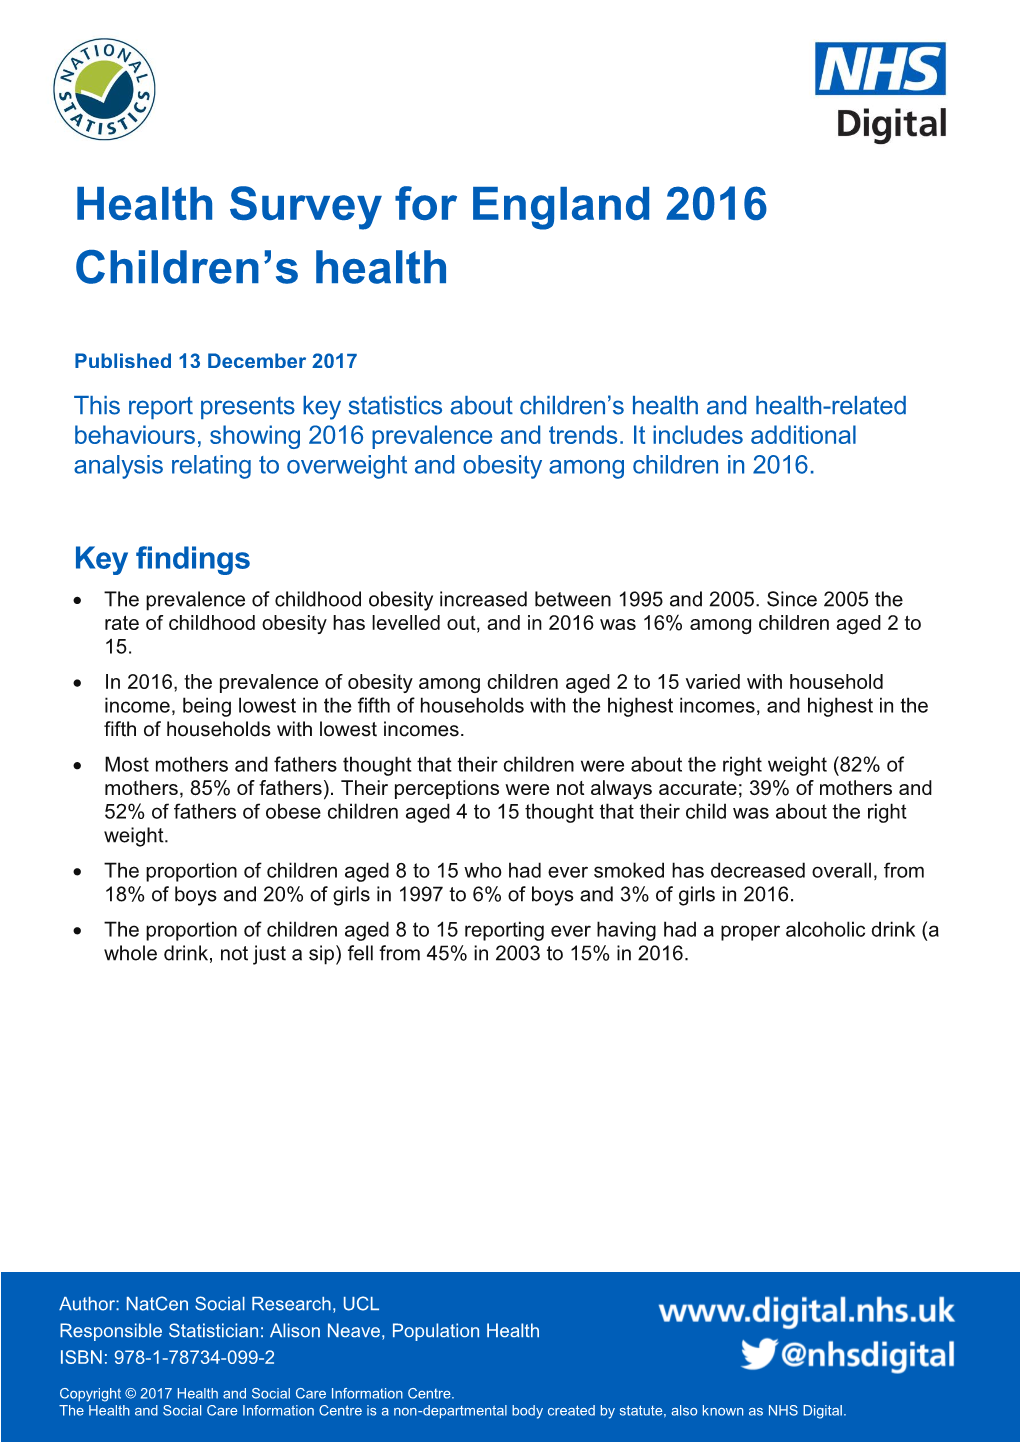 Health Survey for England 2016 Children's Health